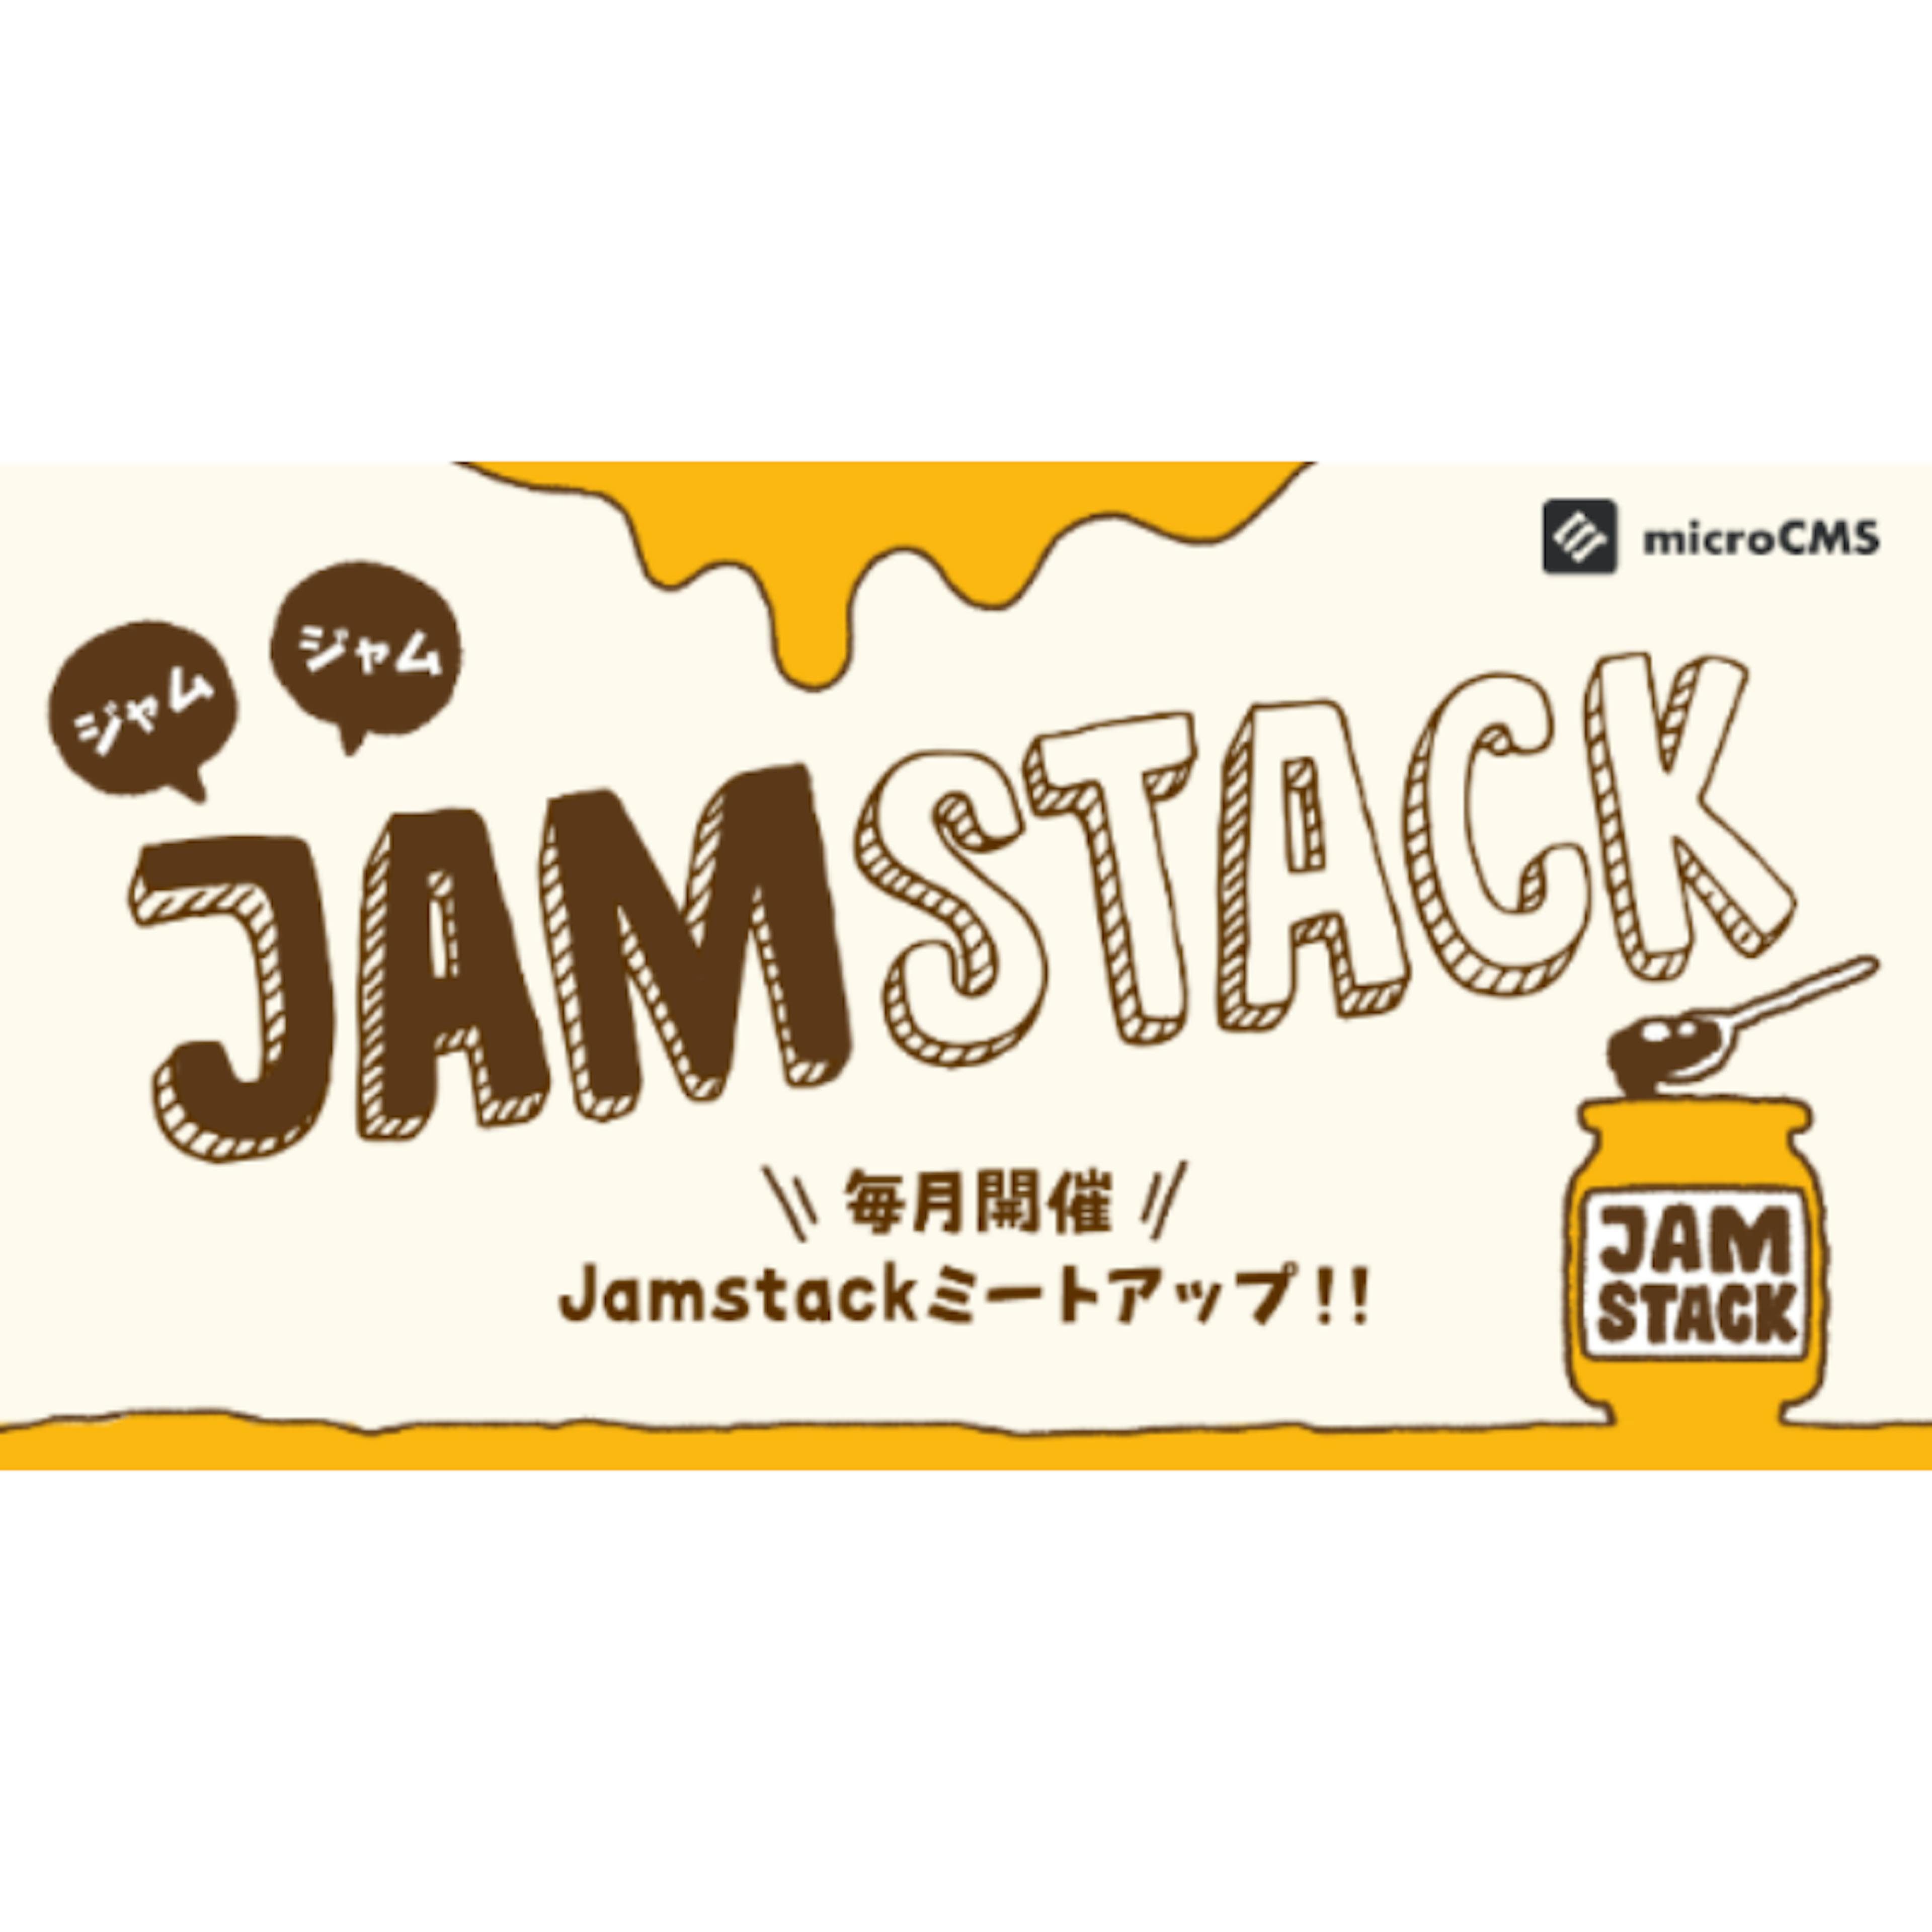 Jamstack勉強会「ジャムジャム!!Jamstack」に参加しました